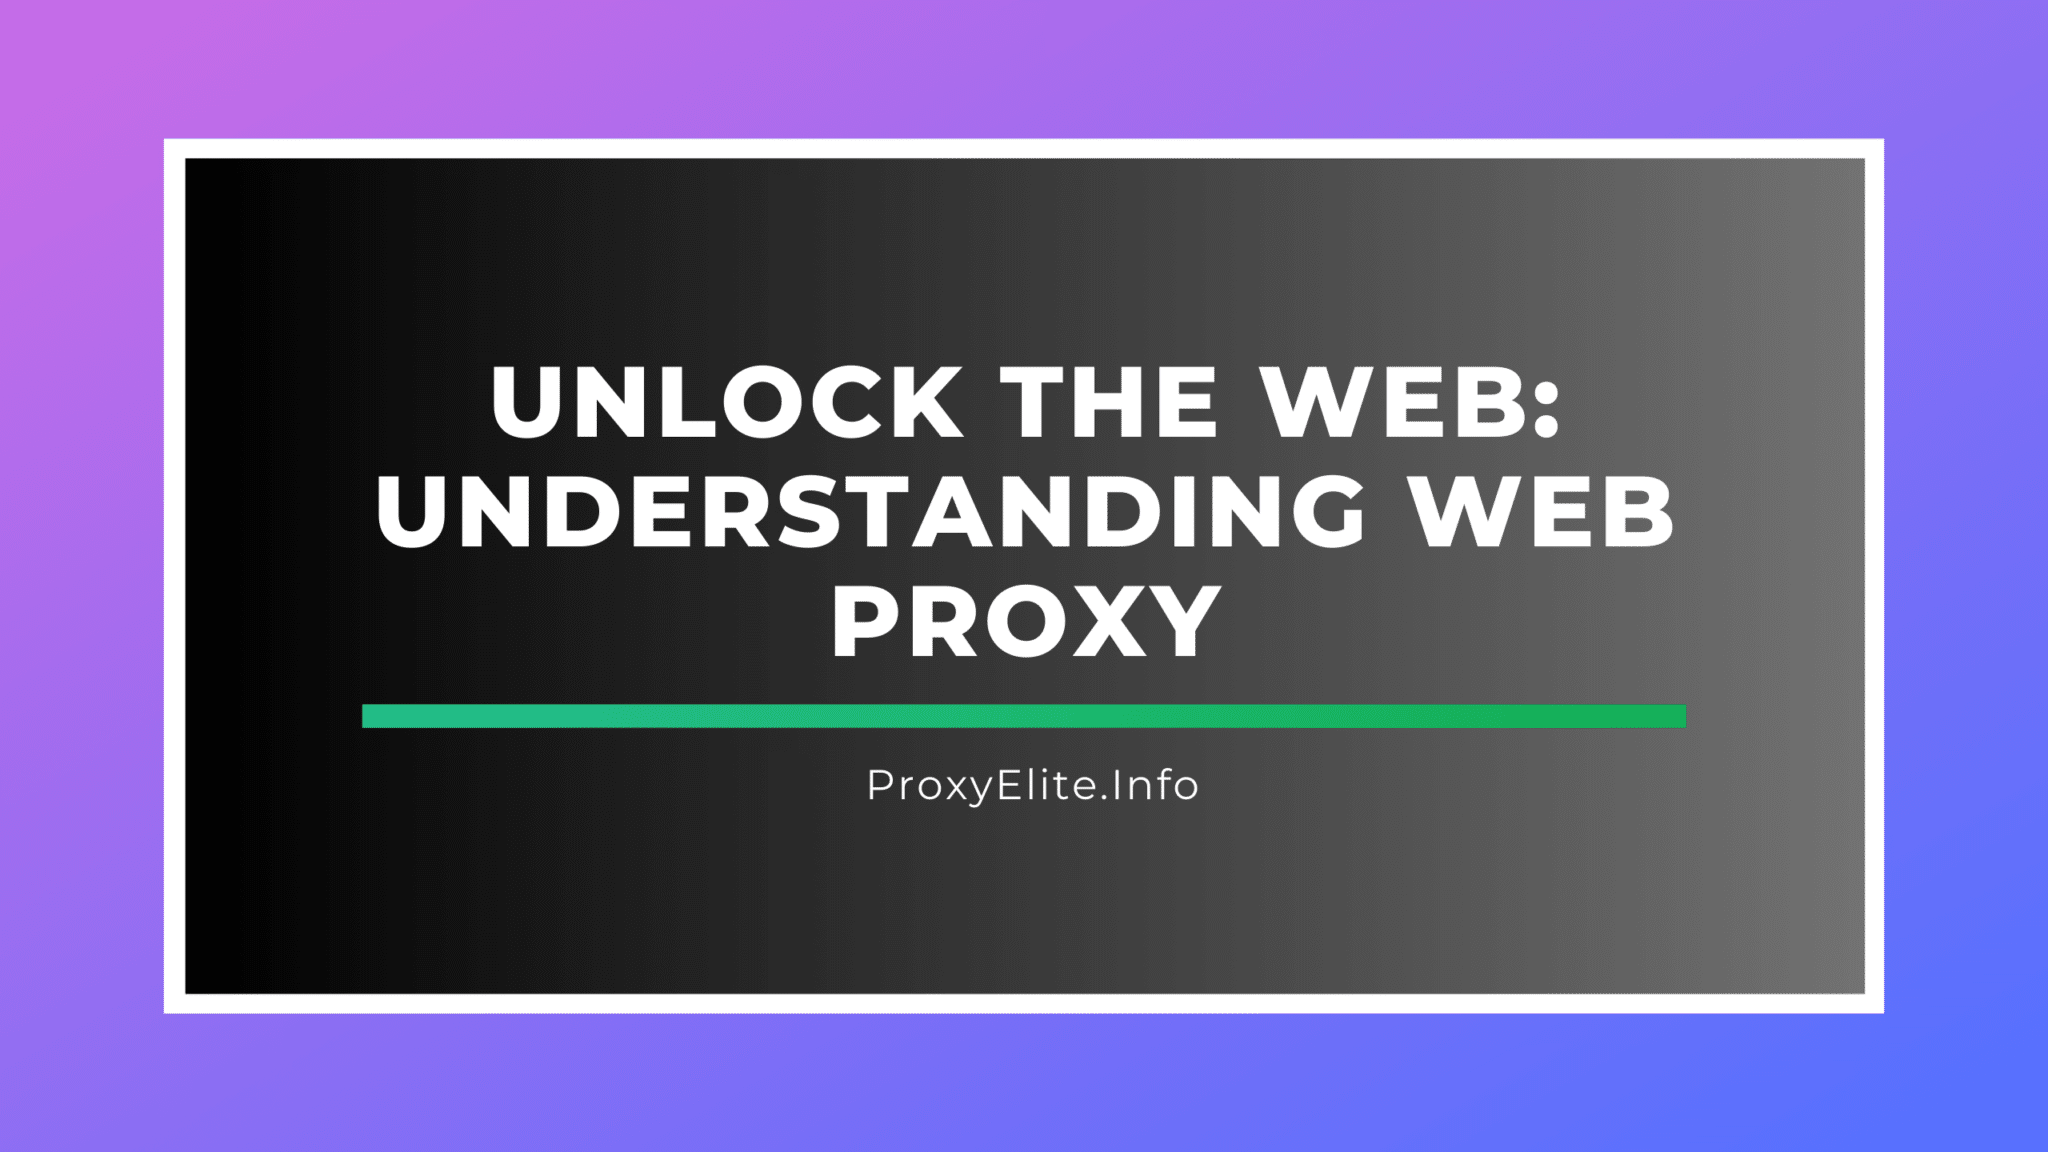 Desbloqueie a Web: Compreendendo o Web Proxy